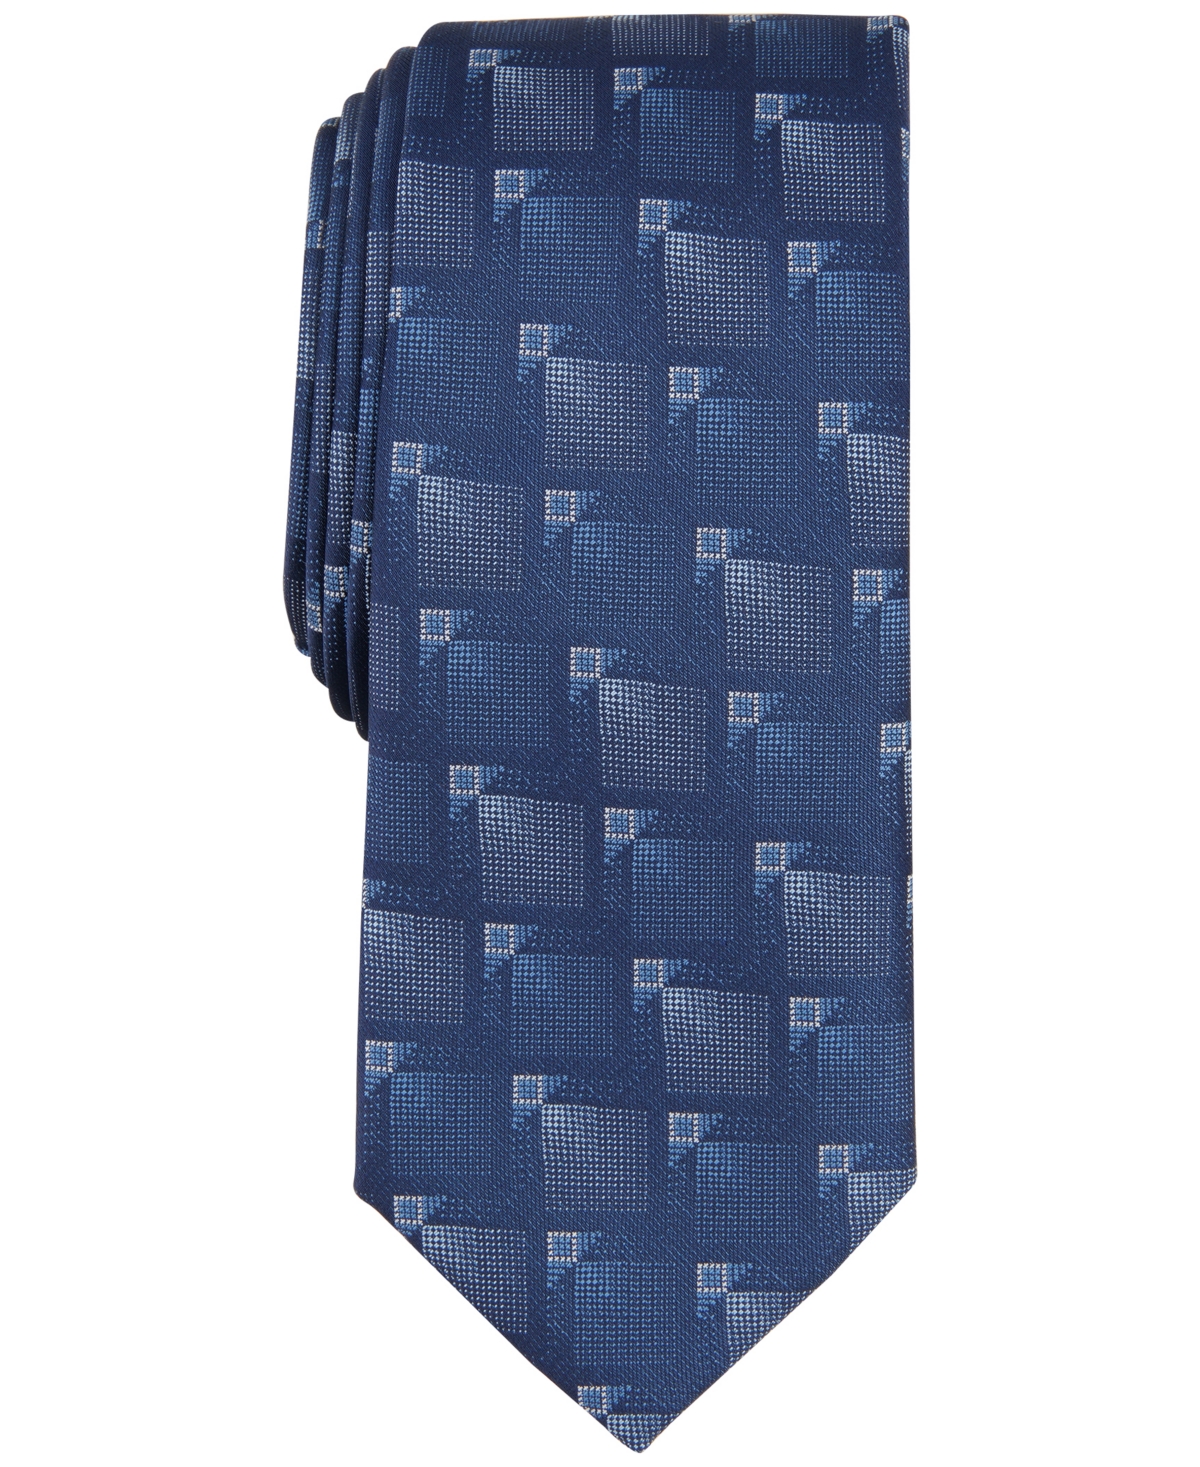 Men's Aster Geo-Pattern Tie, Created for Macy's - Navy